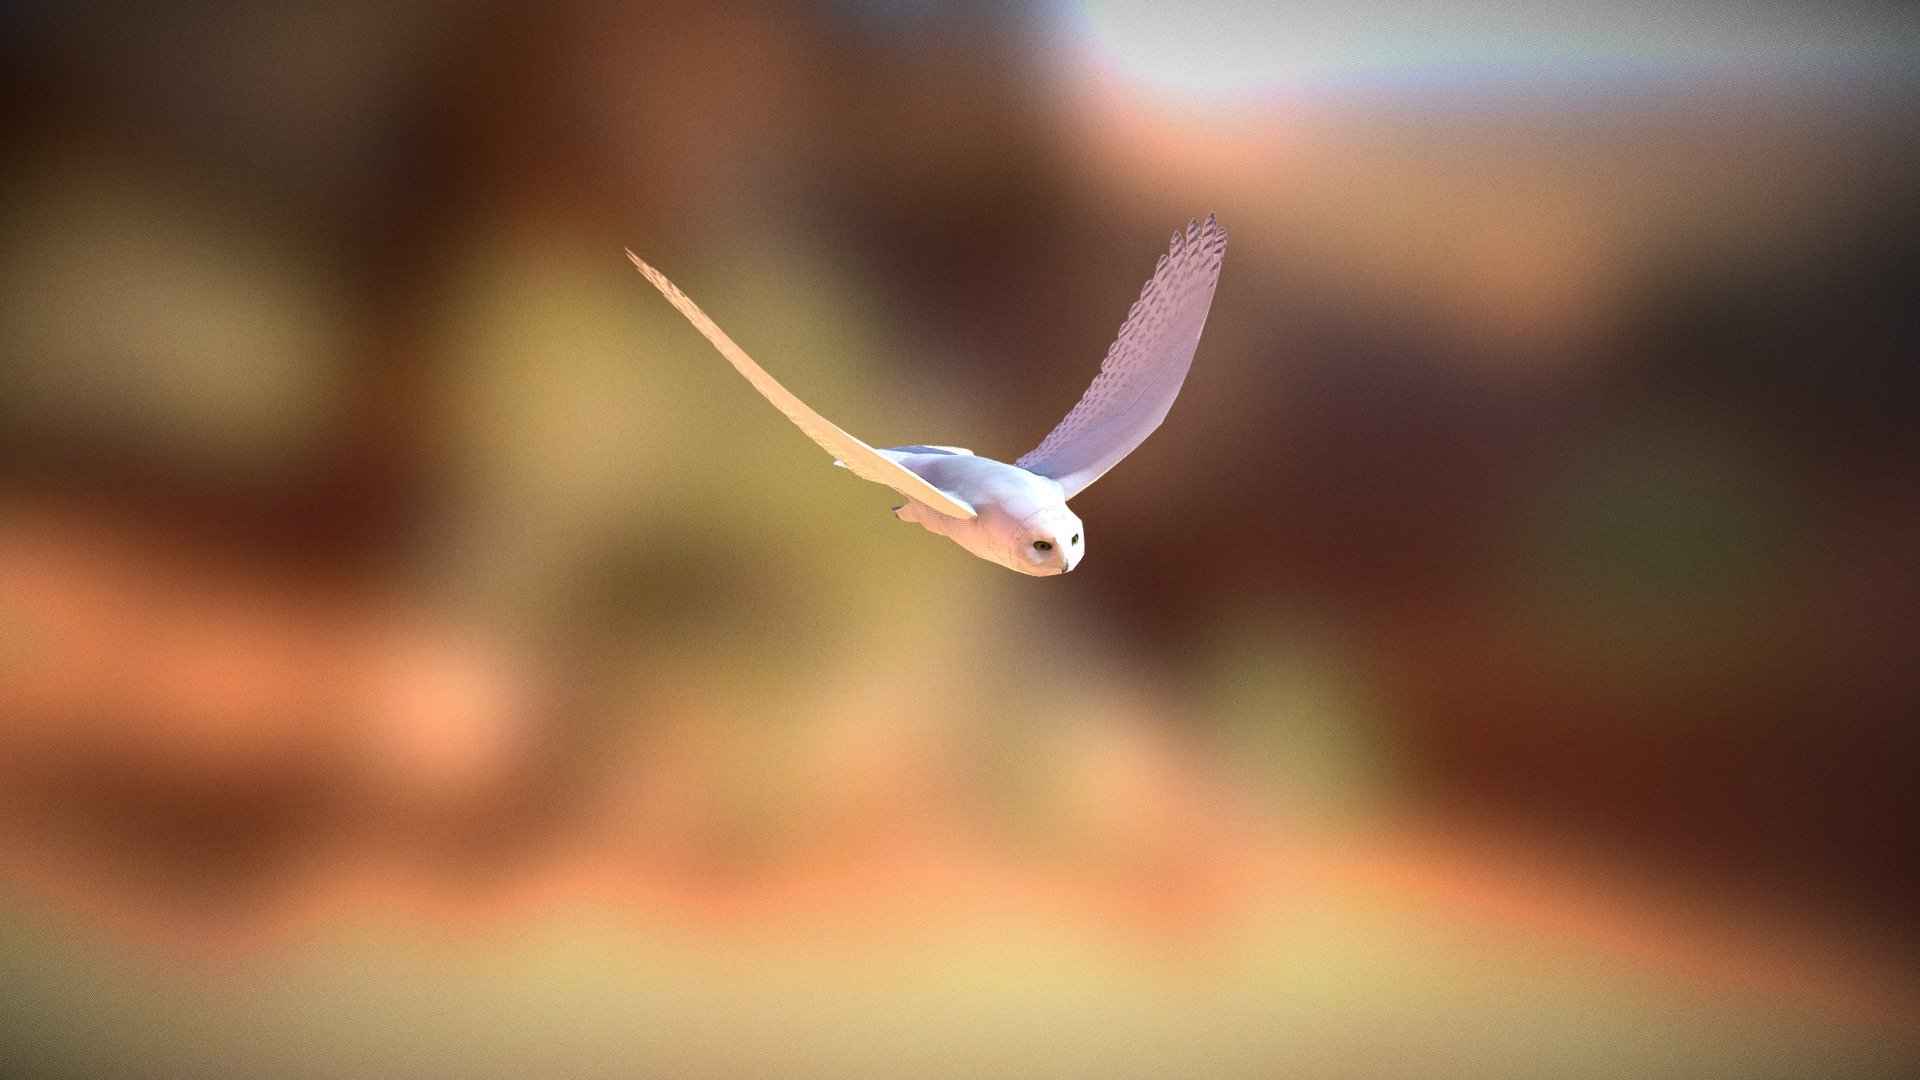 from web-games “Motorbike Escape” - Owl Hedwig - 3D model by suummalumcuique 3d model